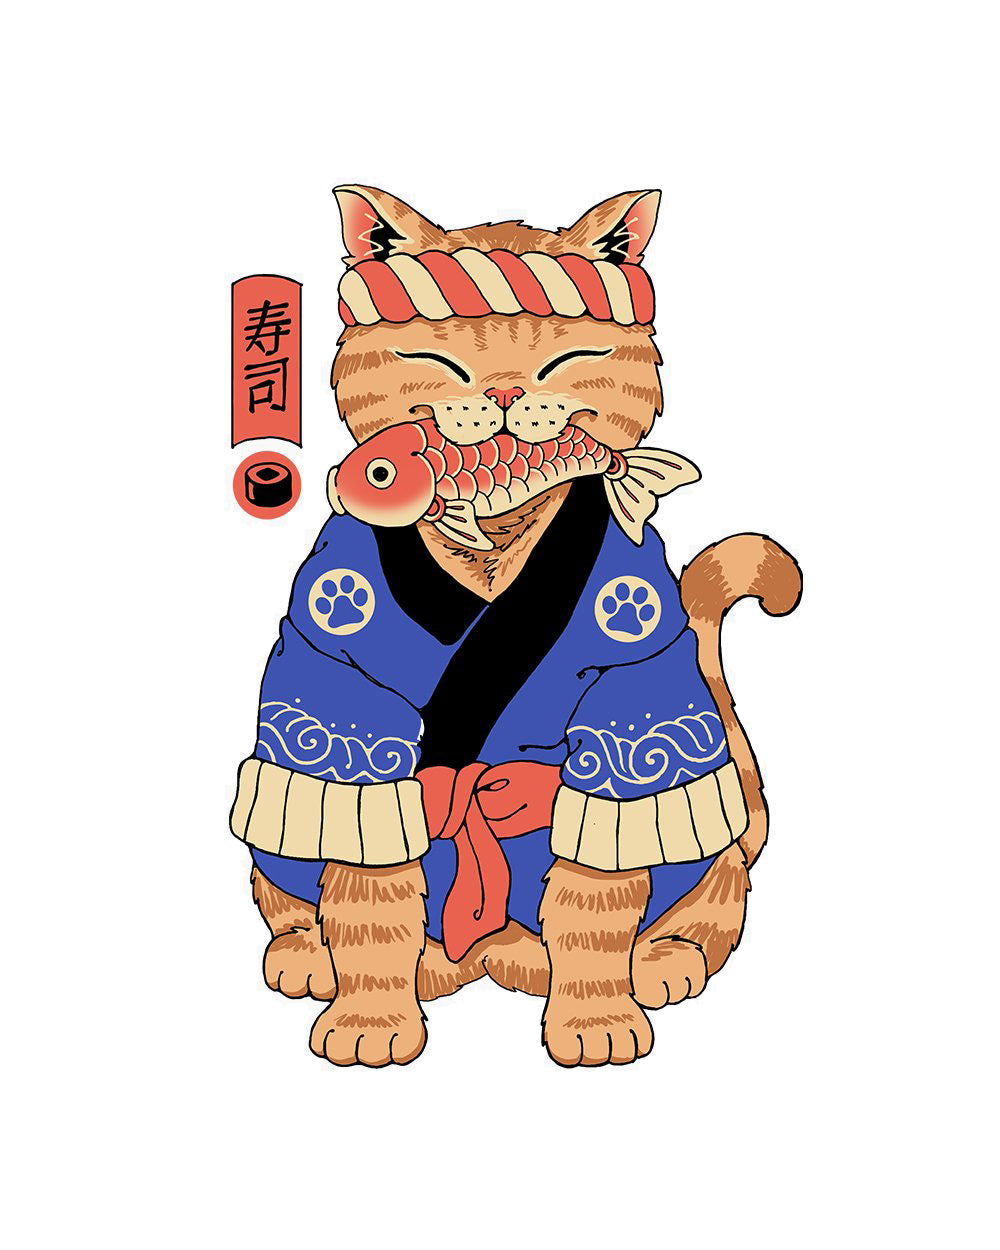 Sushi Cat Meowster Japanese Japan Kitten Fish Food Foodie Cute Animal Artsy Cotton T-Shirt